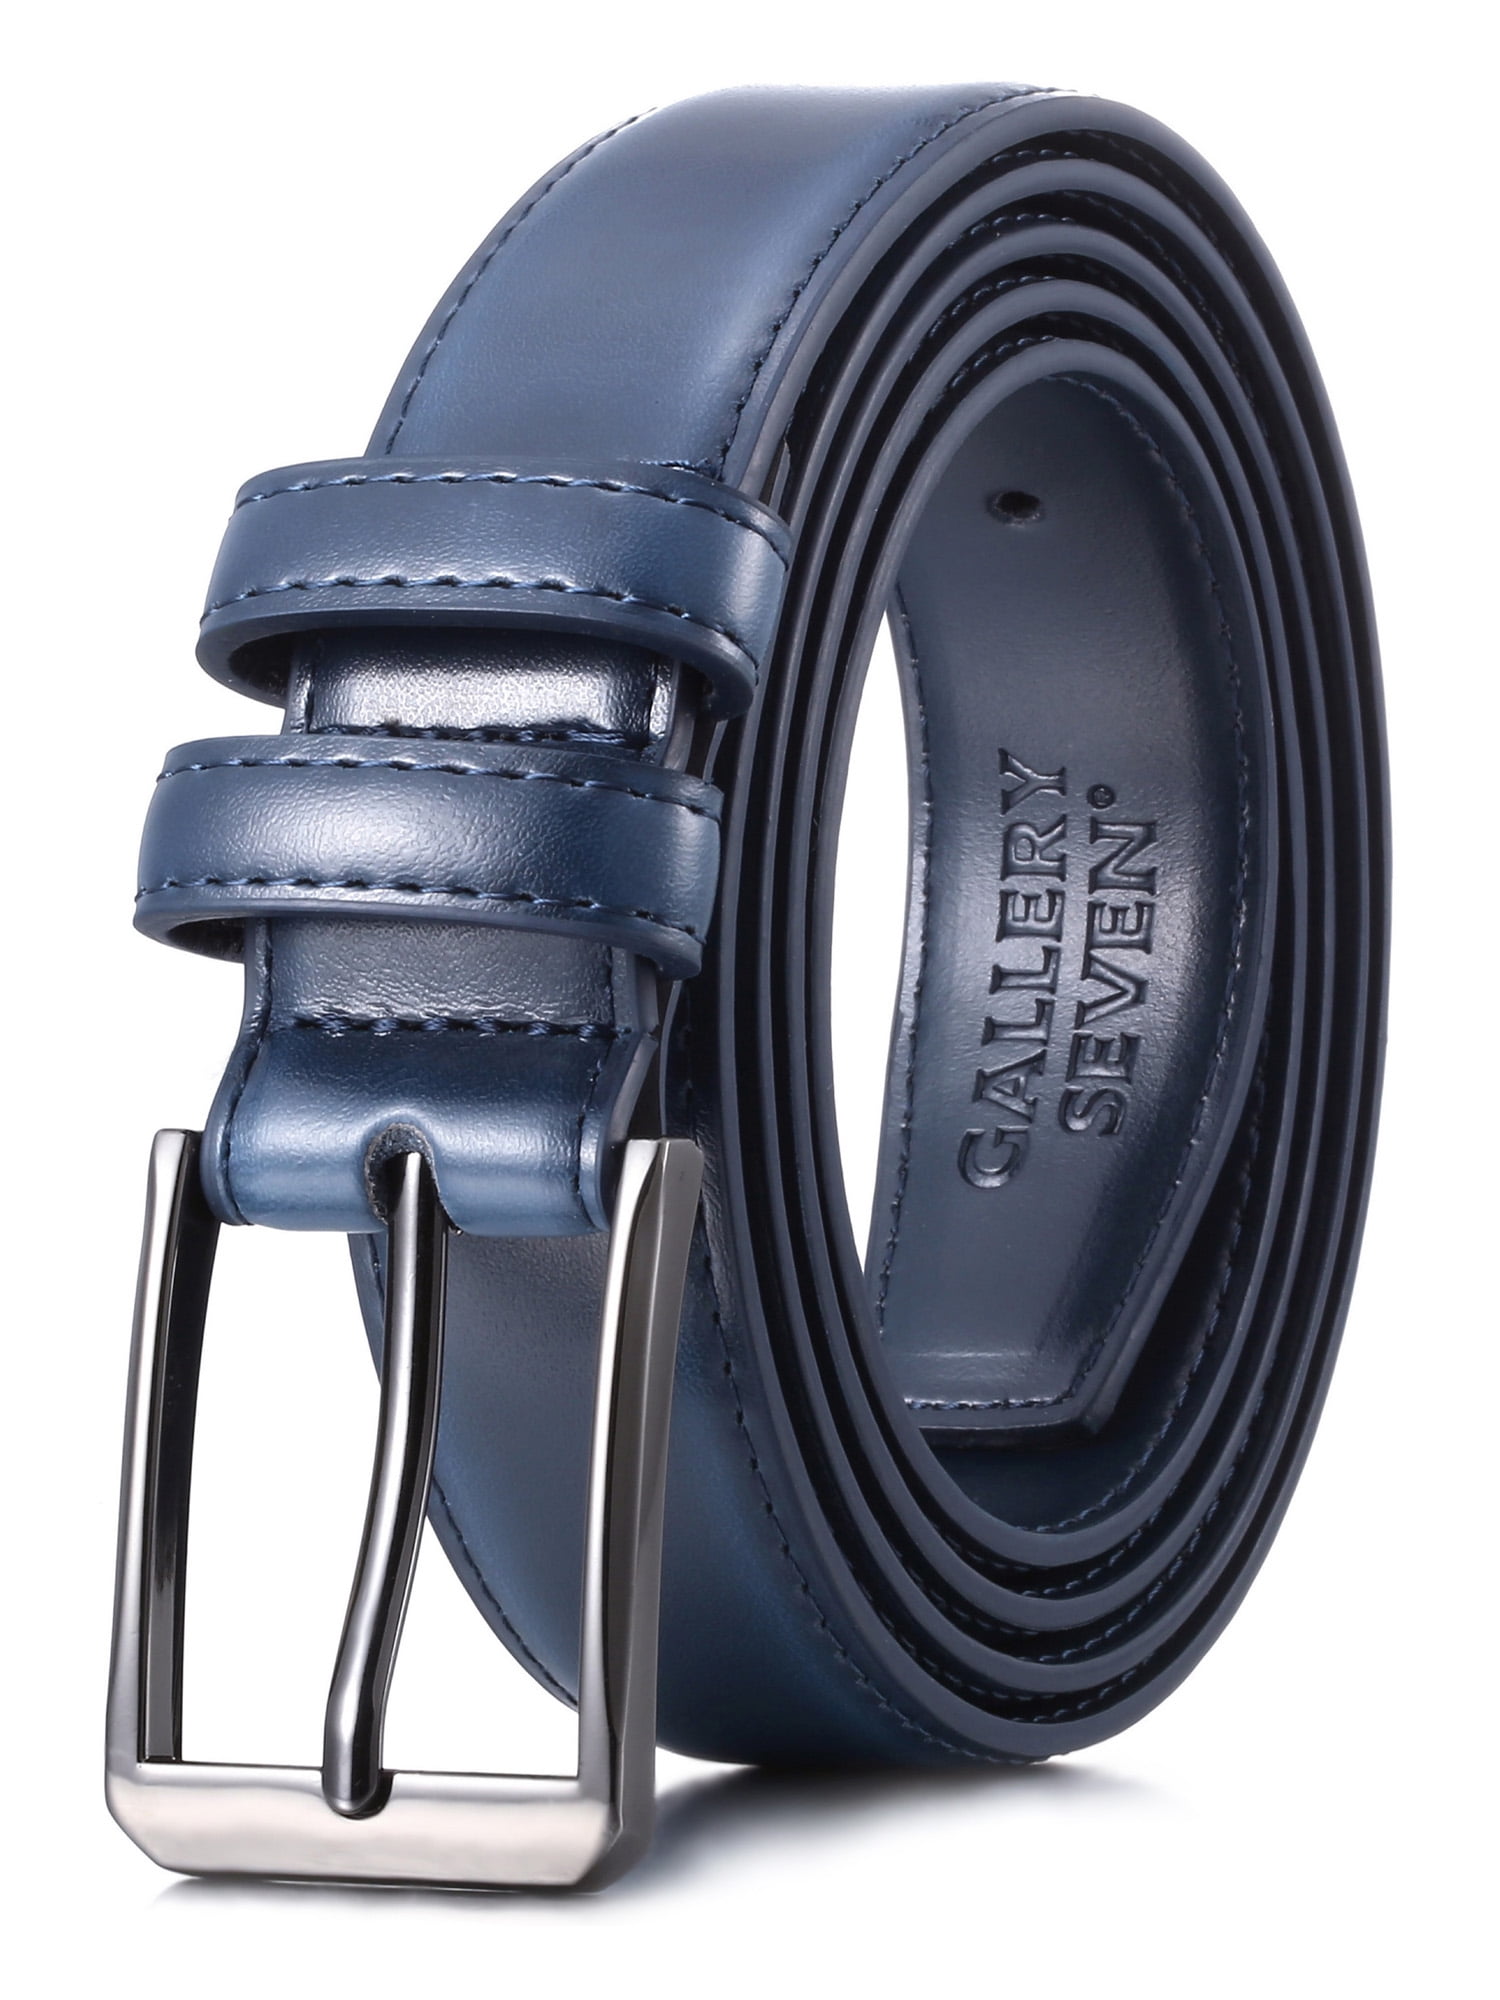 Genuine Leather Belt Track Line Ratchet belt 34 to 36 inch Women's Leather belt 